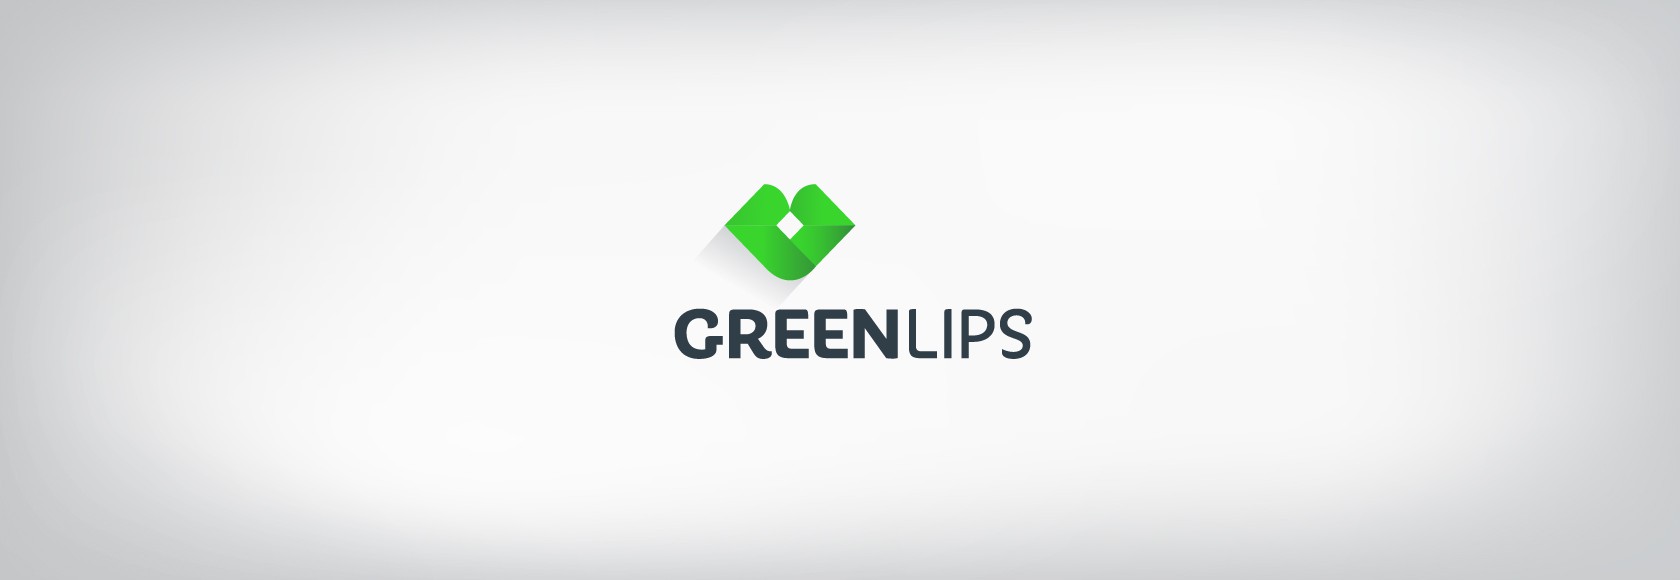 Green-Lips-Branding_dashing_greenlip_01__1473725716_220.244.235.1